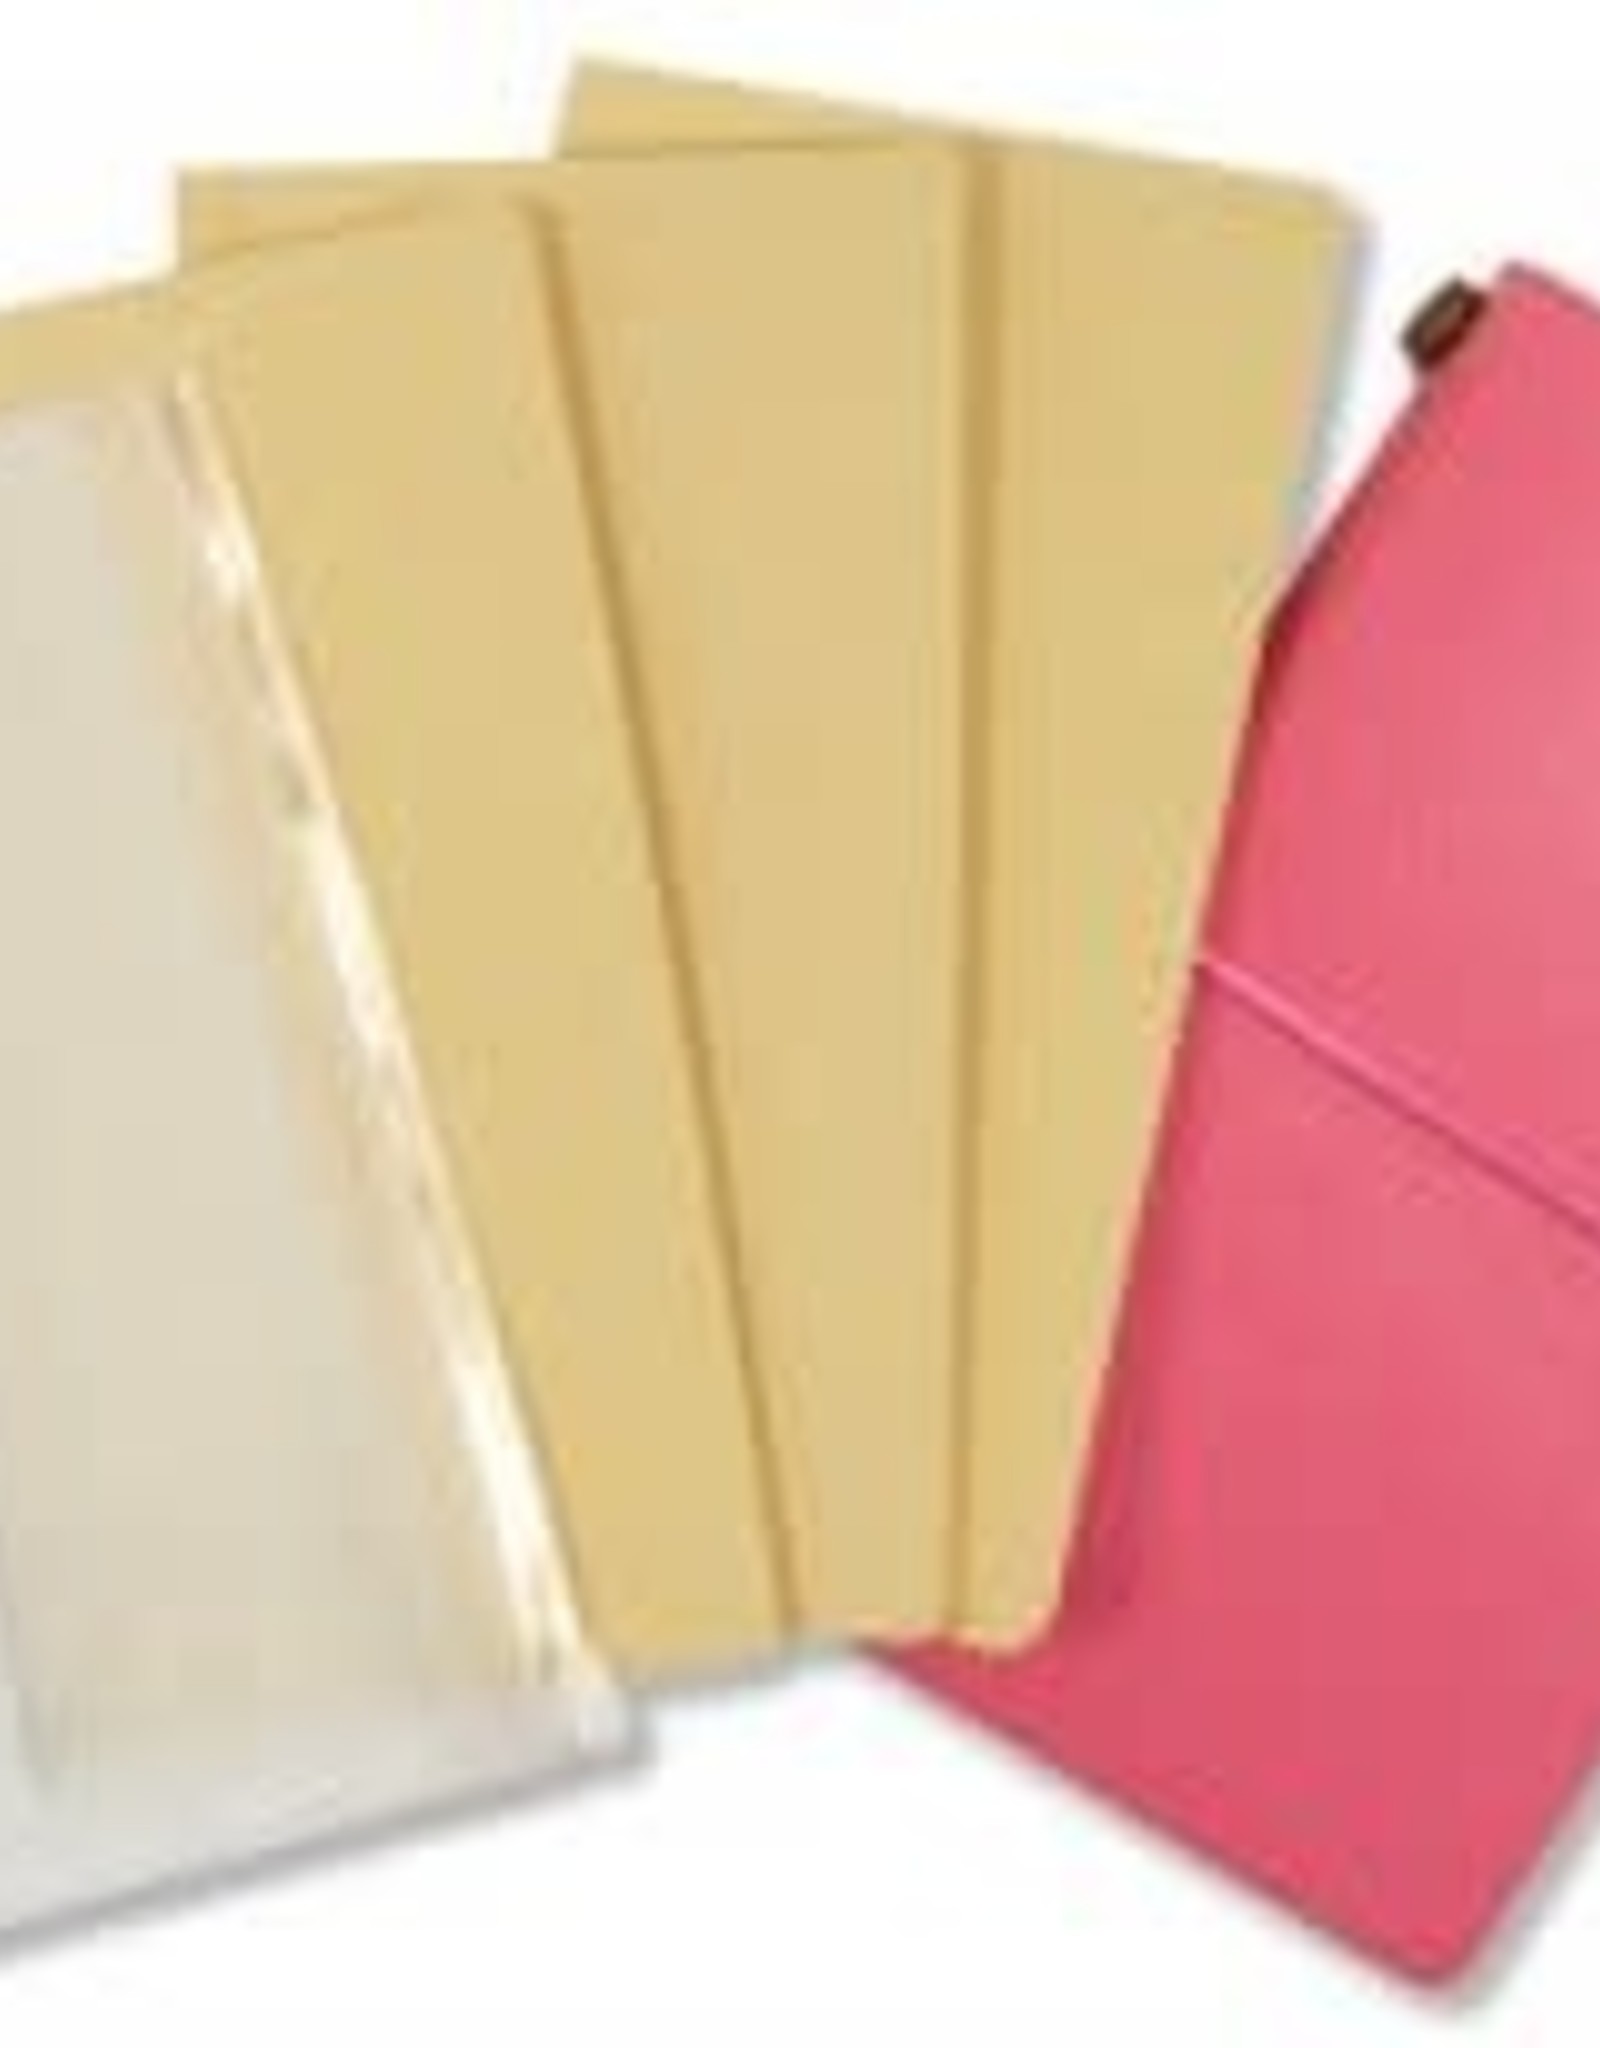 Peter Pauper Press Voyager Pink Notebook